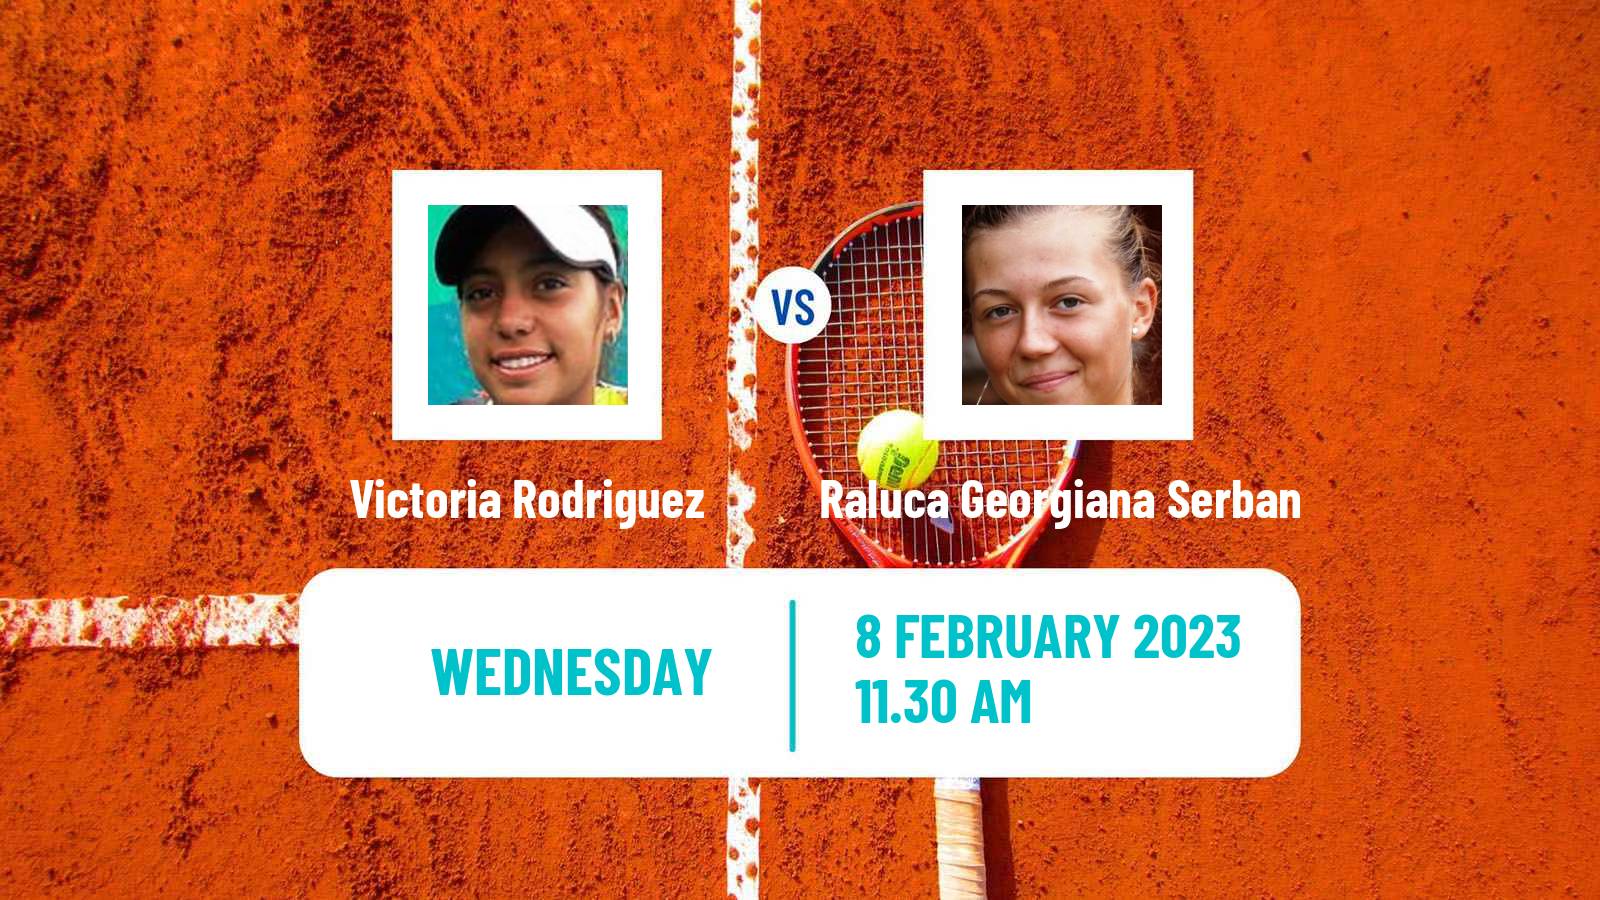 Tennis ITF Tournaments Victoria Rodriguez - Raluca Georgiana Serban